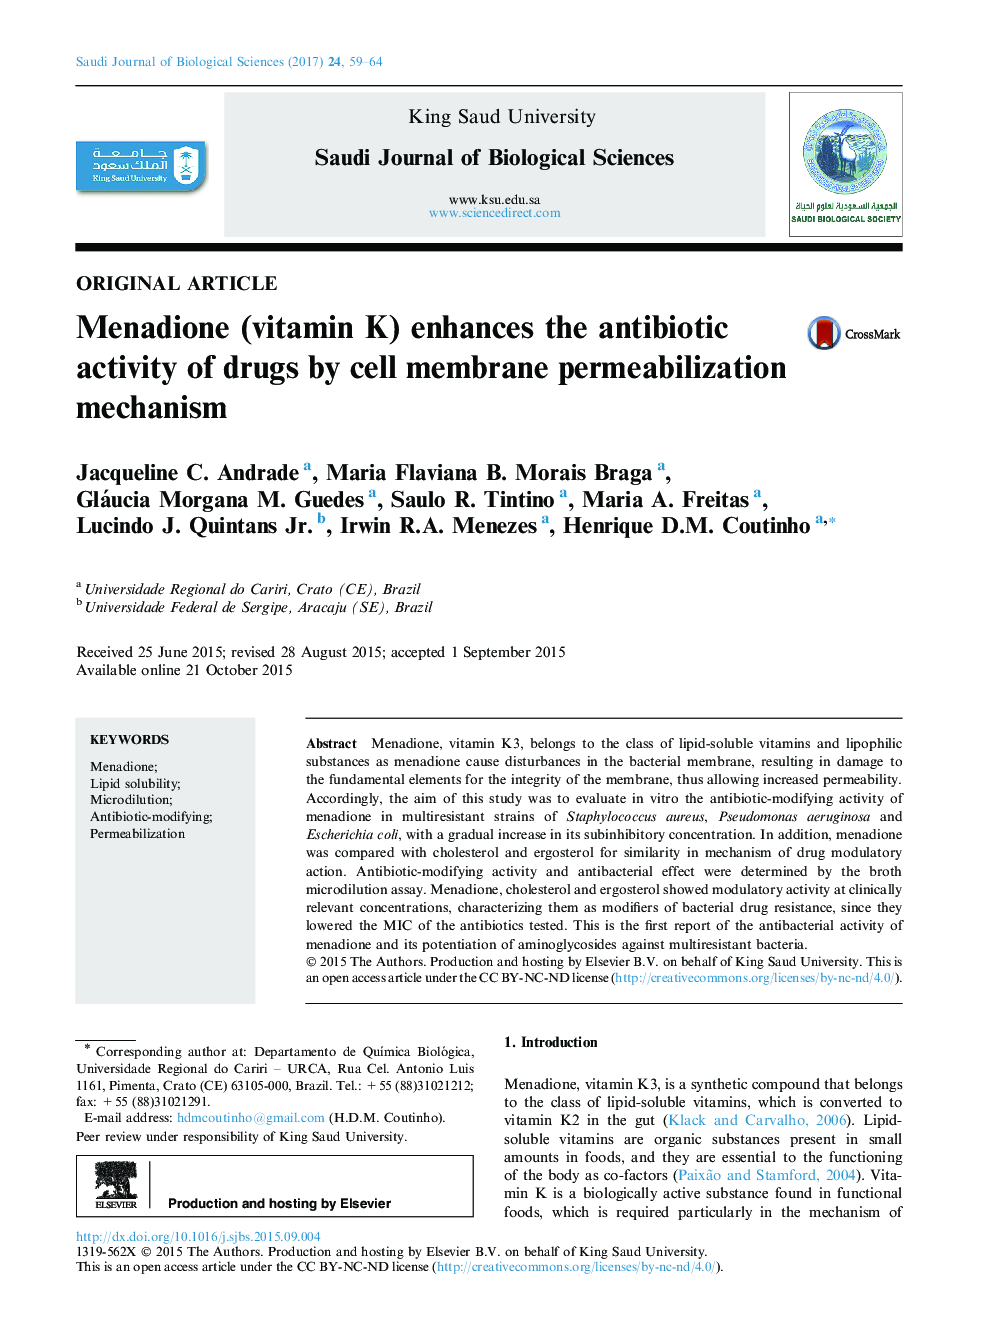 Original articleMenadione (vitamin K) enhances the antibiotic activity of drugs by cell membrane permeabilization mechanism